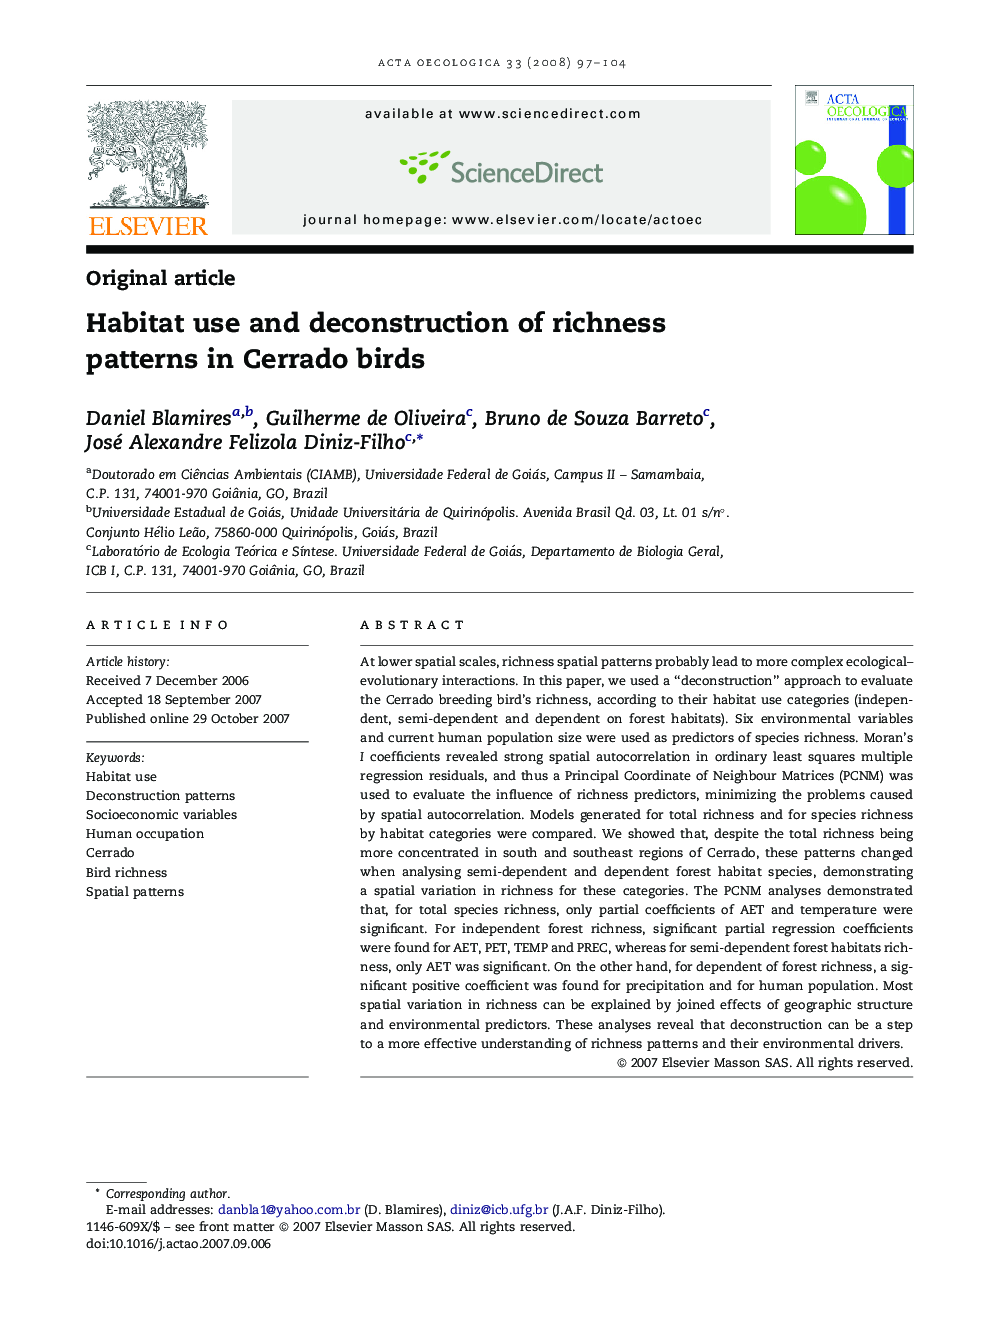 Habitat use and deconstruction of richness patterns in Cerrado birds